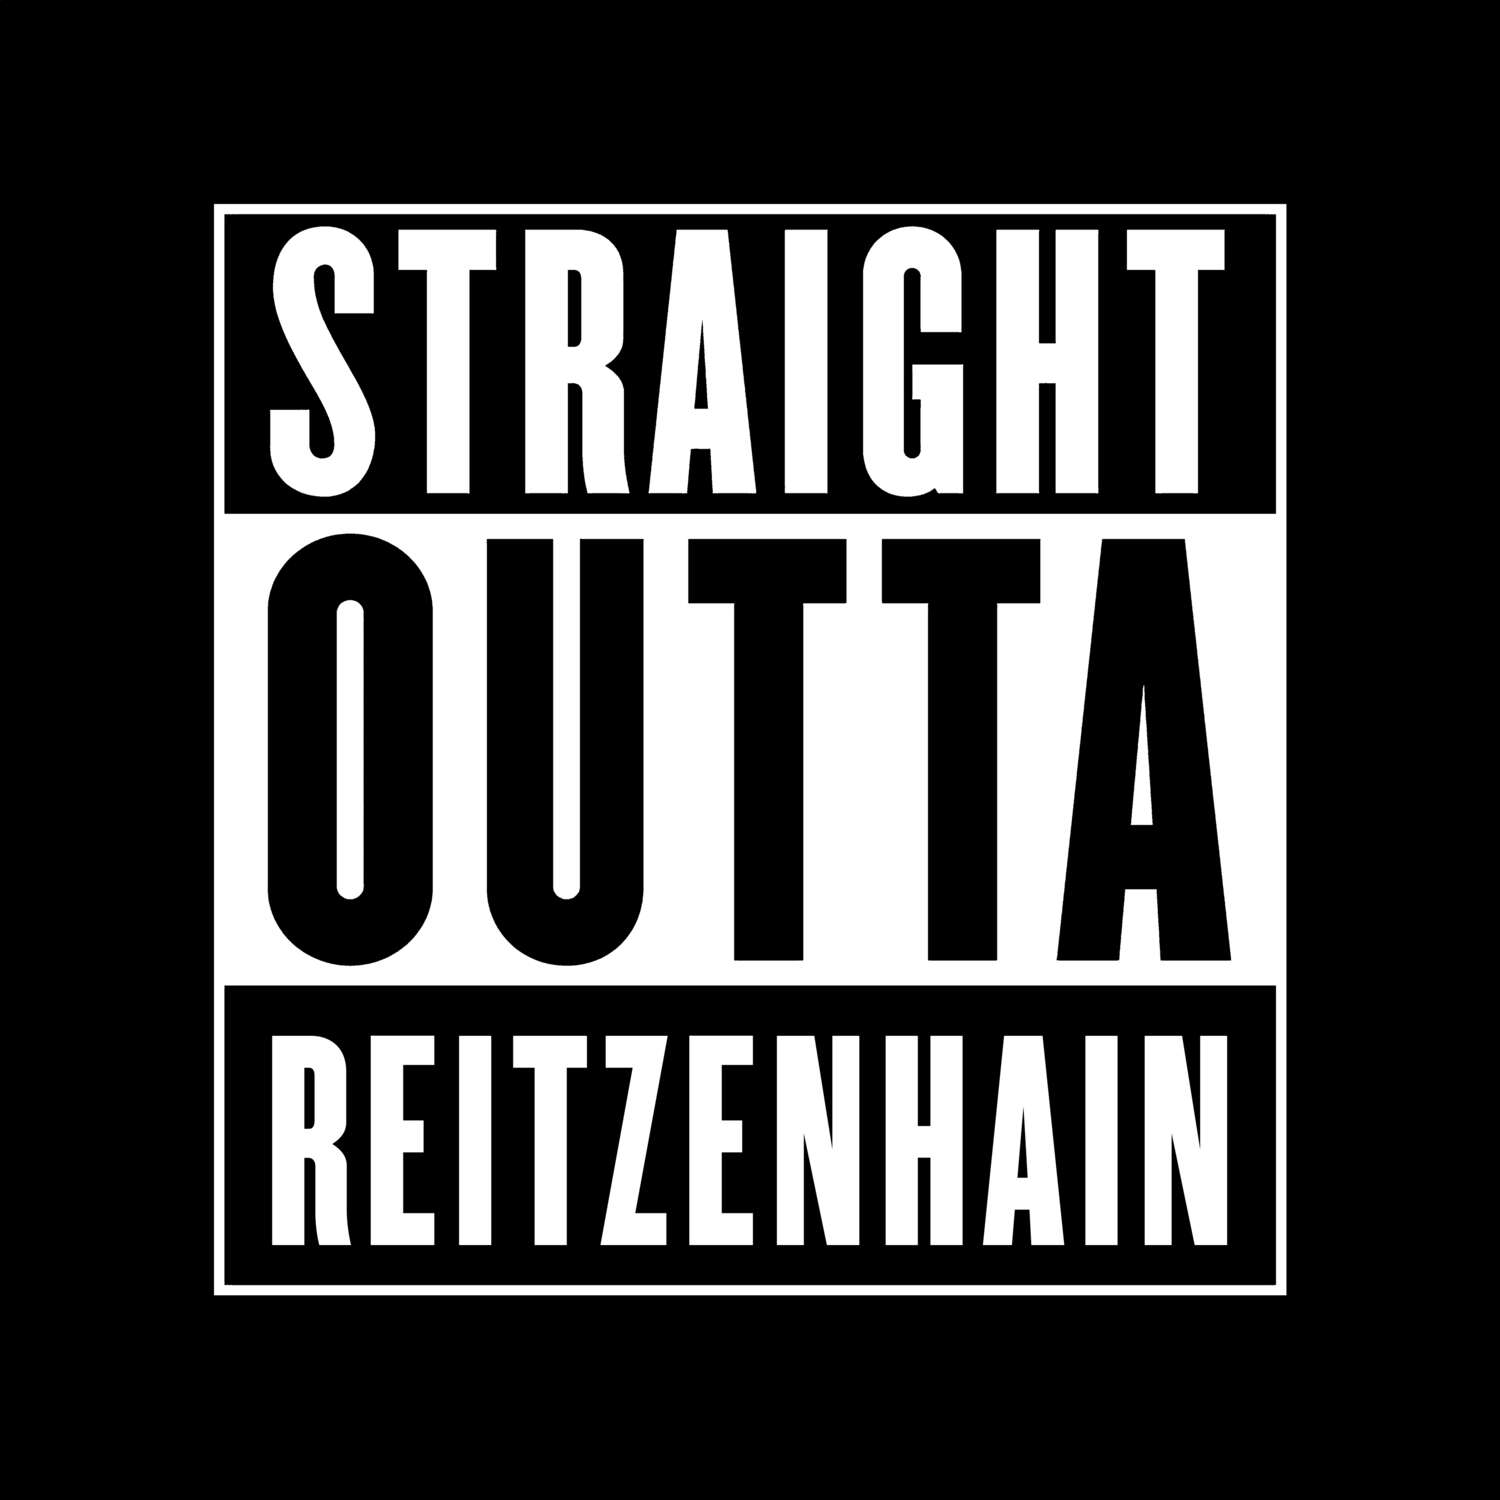 Reitzenhain T-Shirt »Straight Outta«